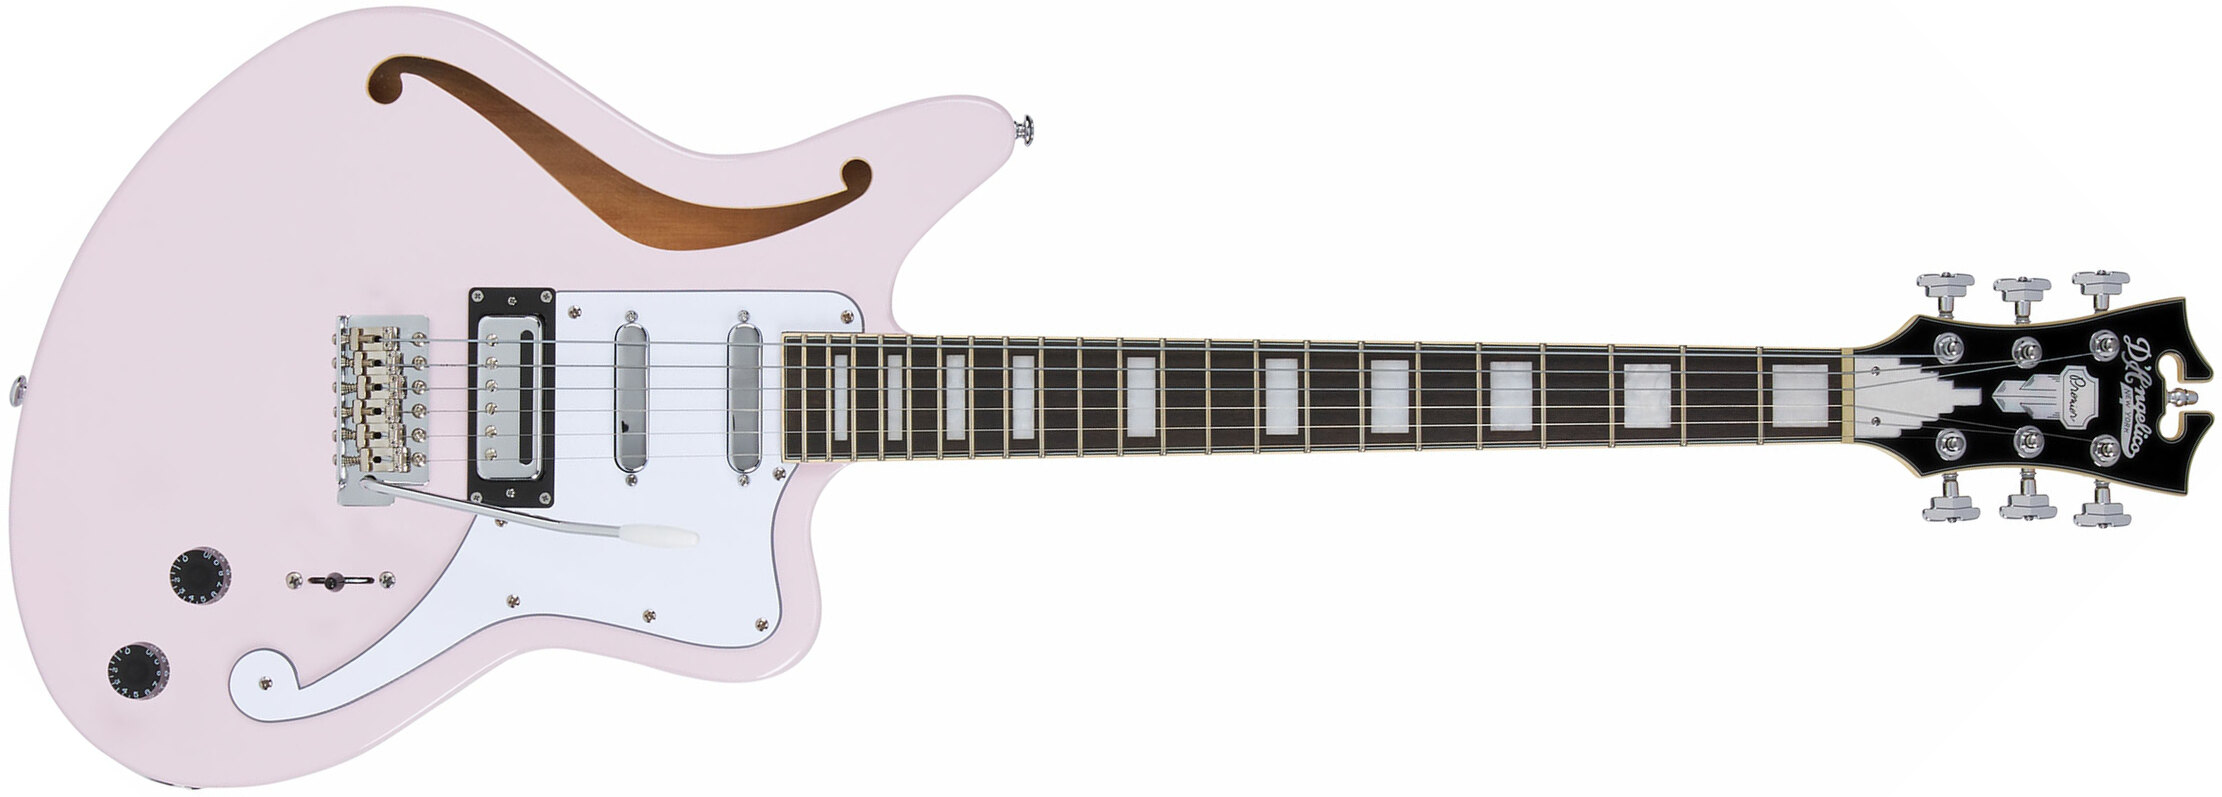 D'angelico Bedford Sh Premier Hss Trem Ova - Shell Pink - Semi-Hollow E-Gitarre - Main picture